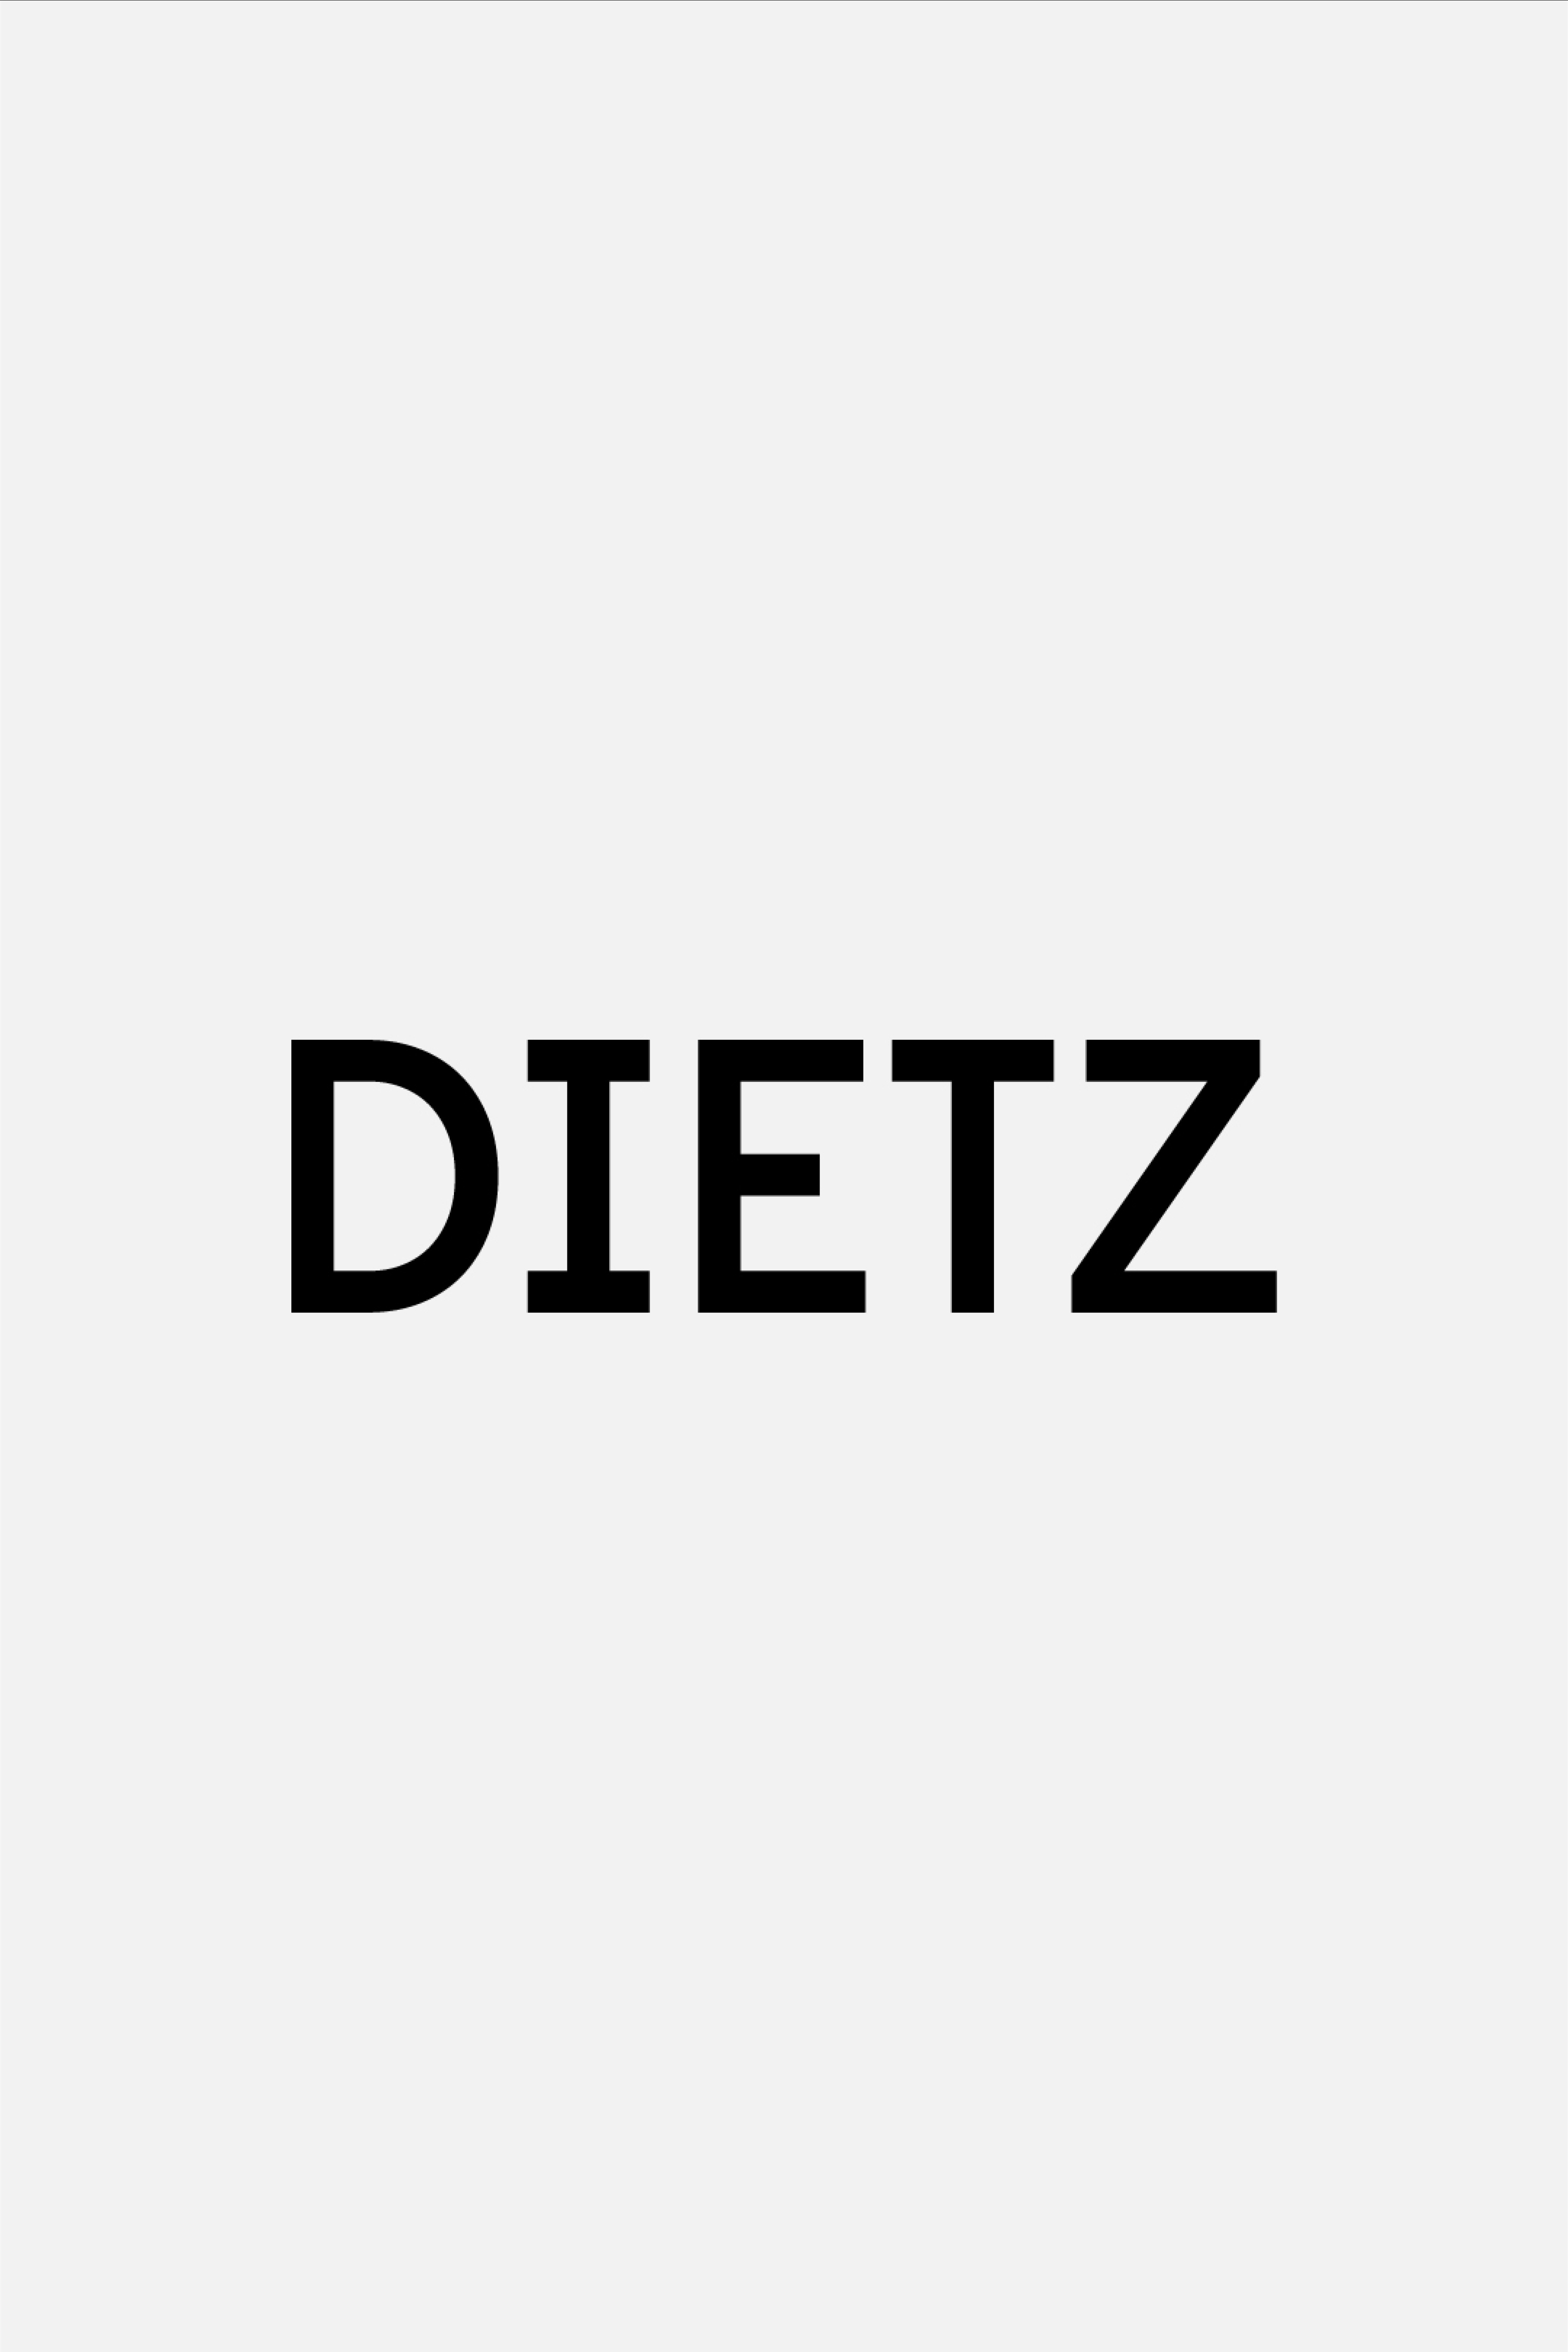 Black logo of the brand "Good Buy! Dietz" on a light grey background.